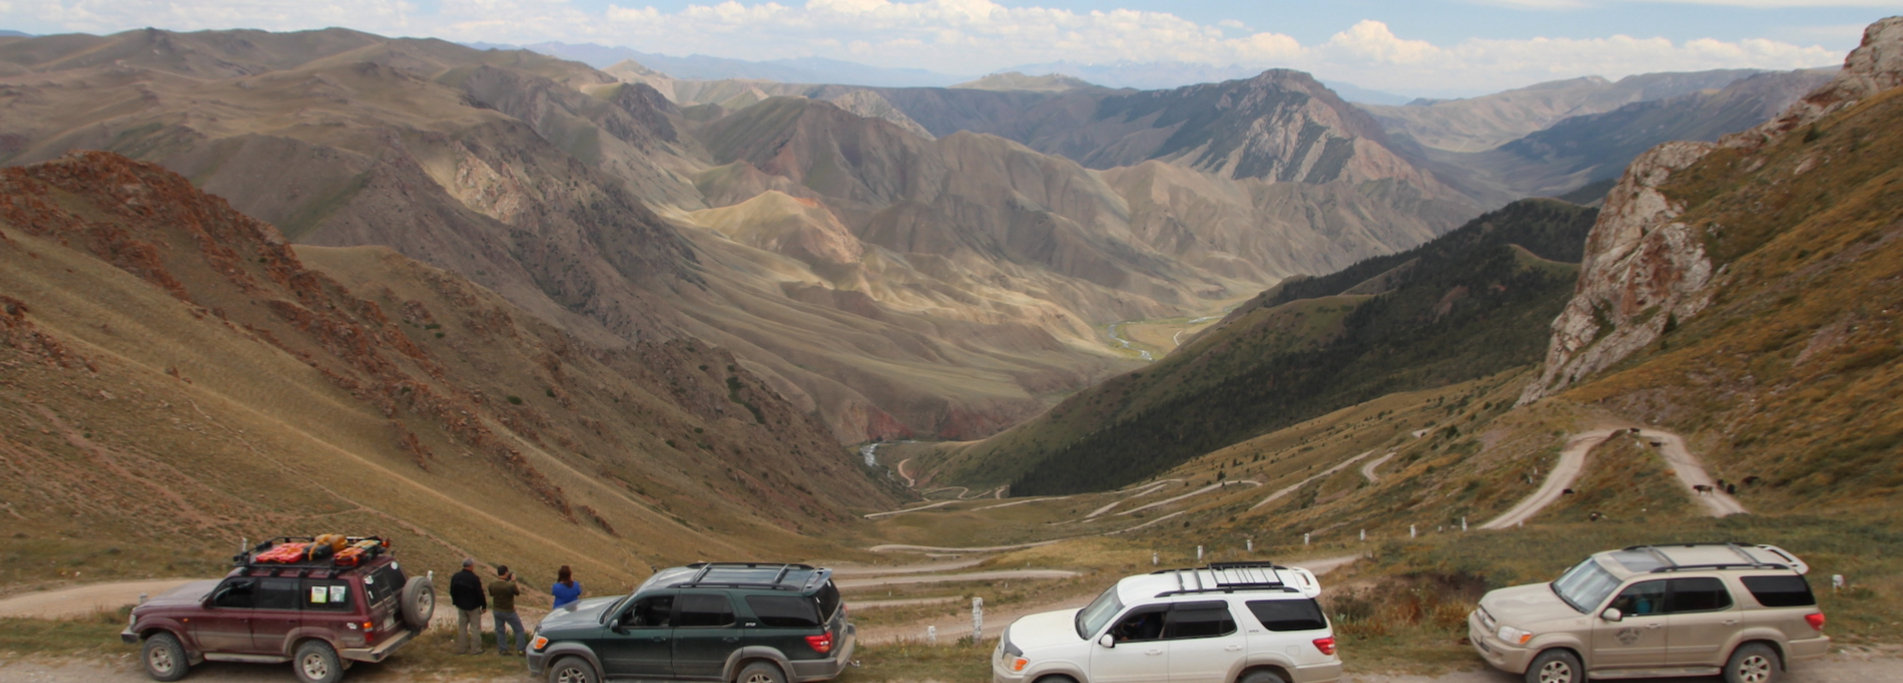 Автотур по Киргизии - Программа 4x4 сами за рулем